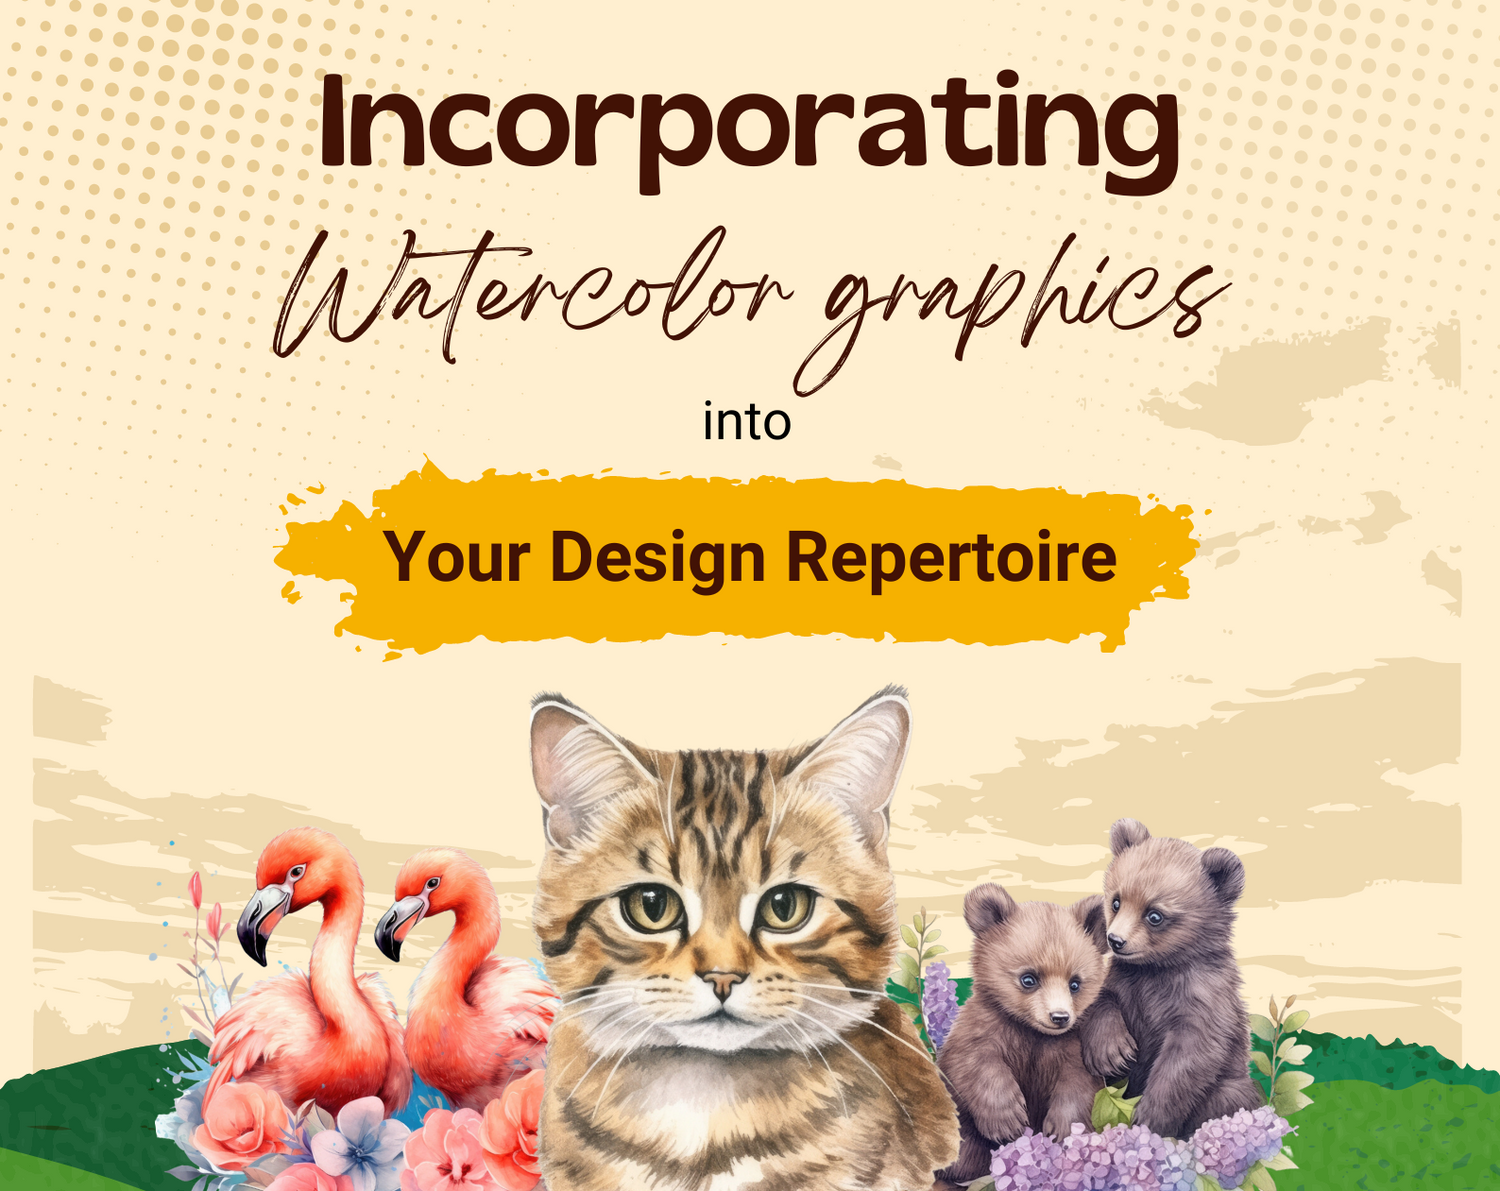 Incorporating Watercolor Graphics into Your Design Repertoire